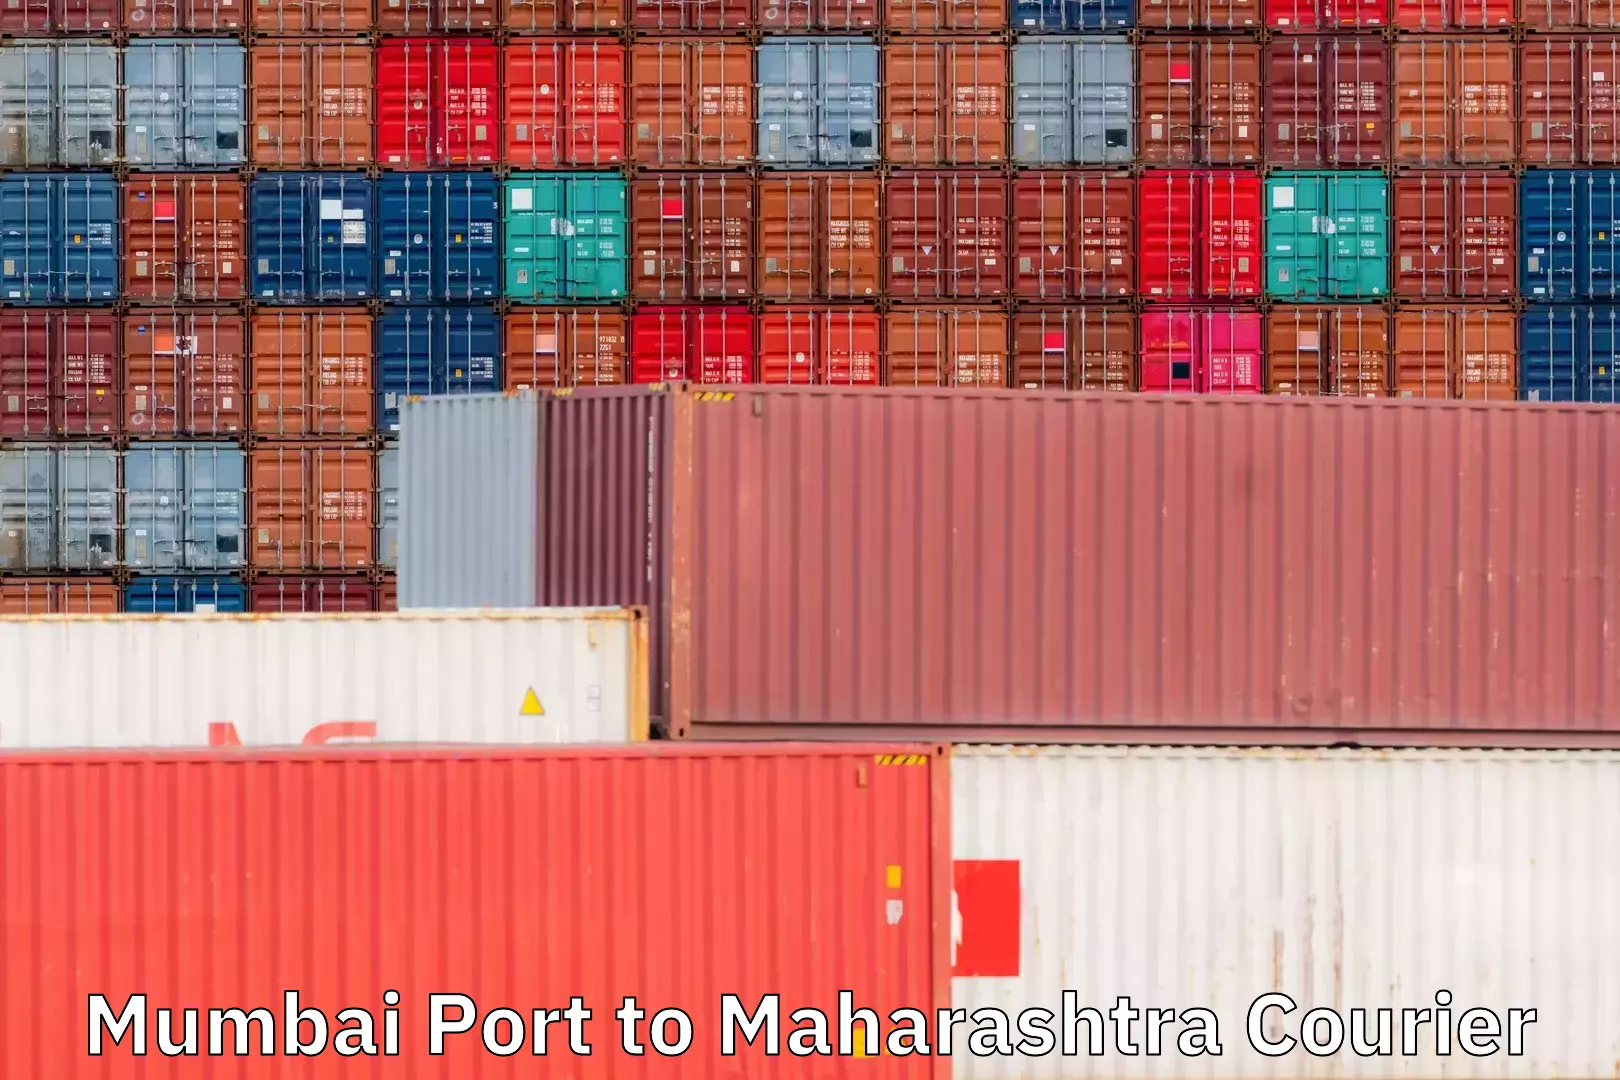 24-hour courier service Mumbai Port to Maharashtra